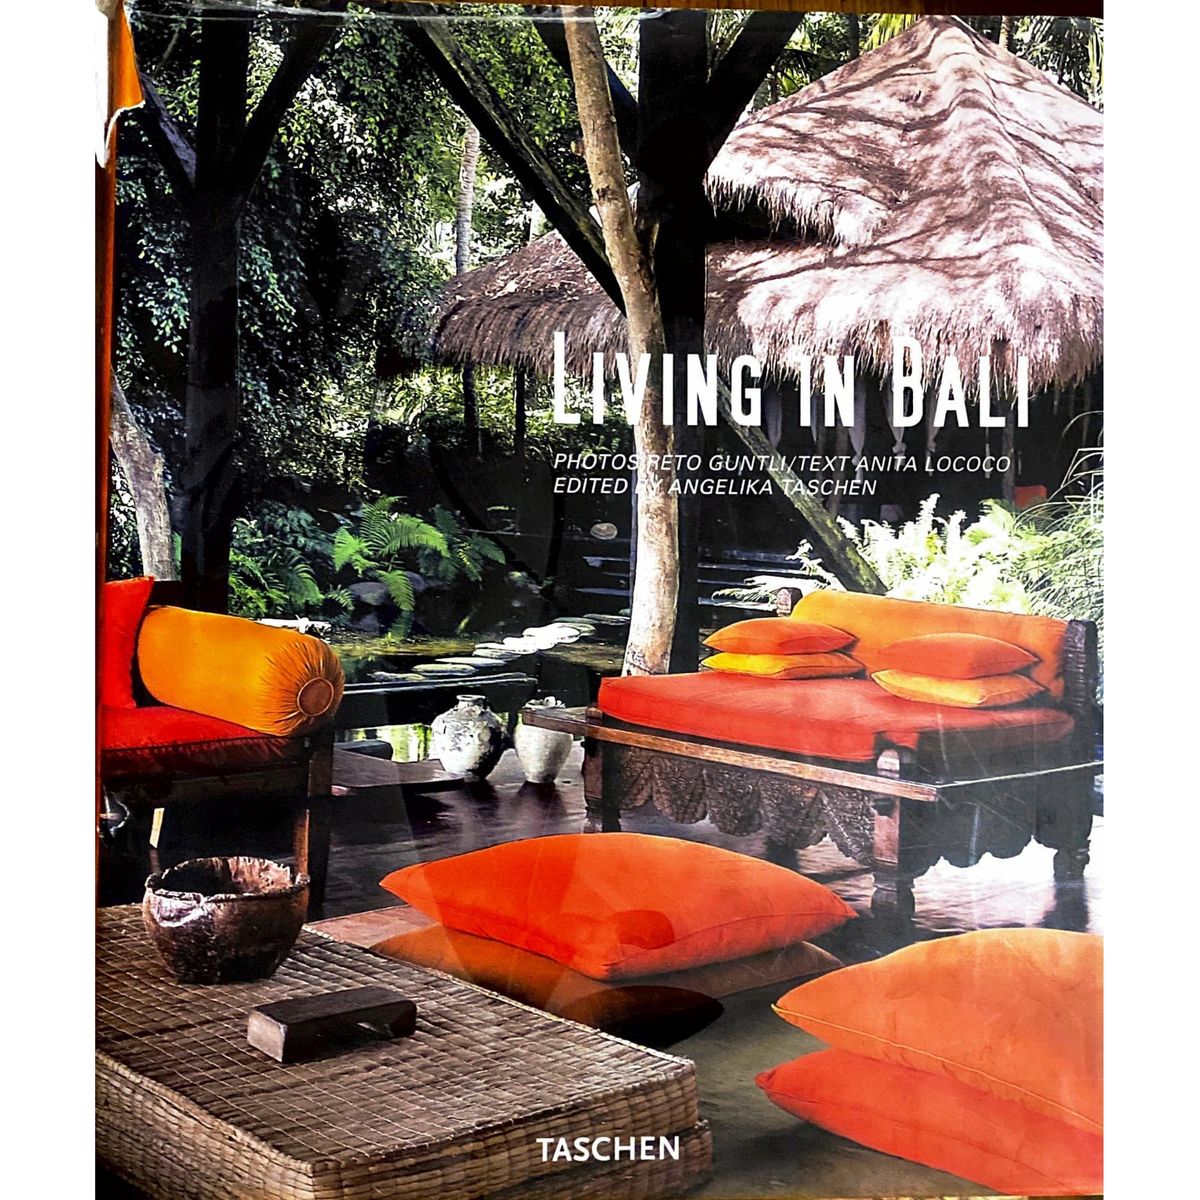 ISBN: 9783822846001 / 3822846007 - Living in Bali by Reto Guntli and Anita Lococo [2005]